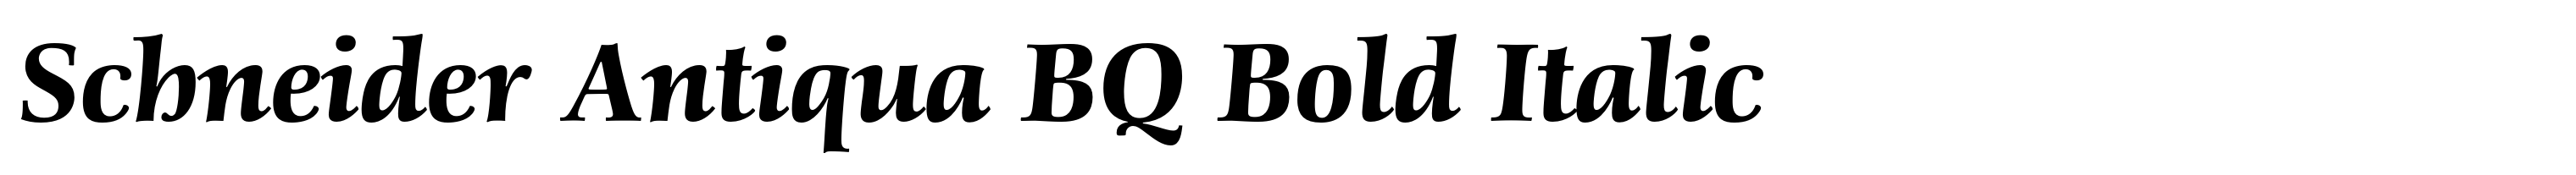 Schneider Antiqua BQ Bold Italic